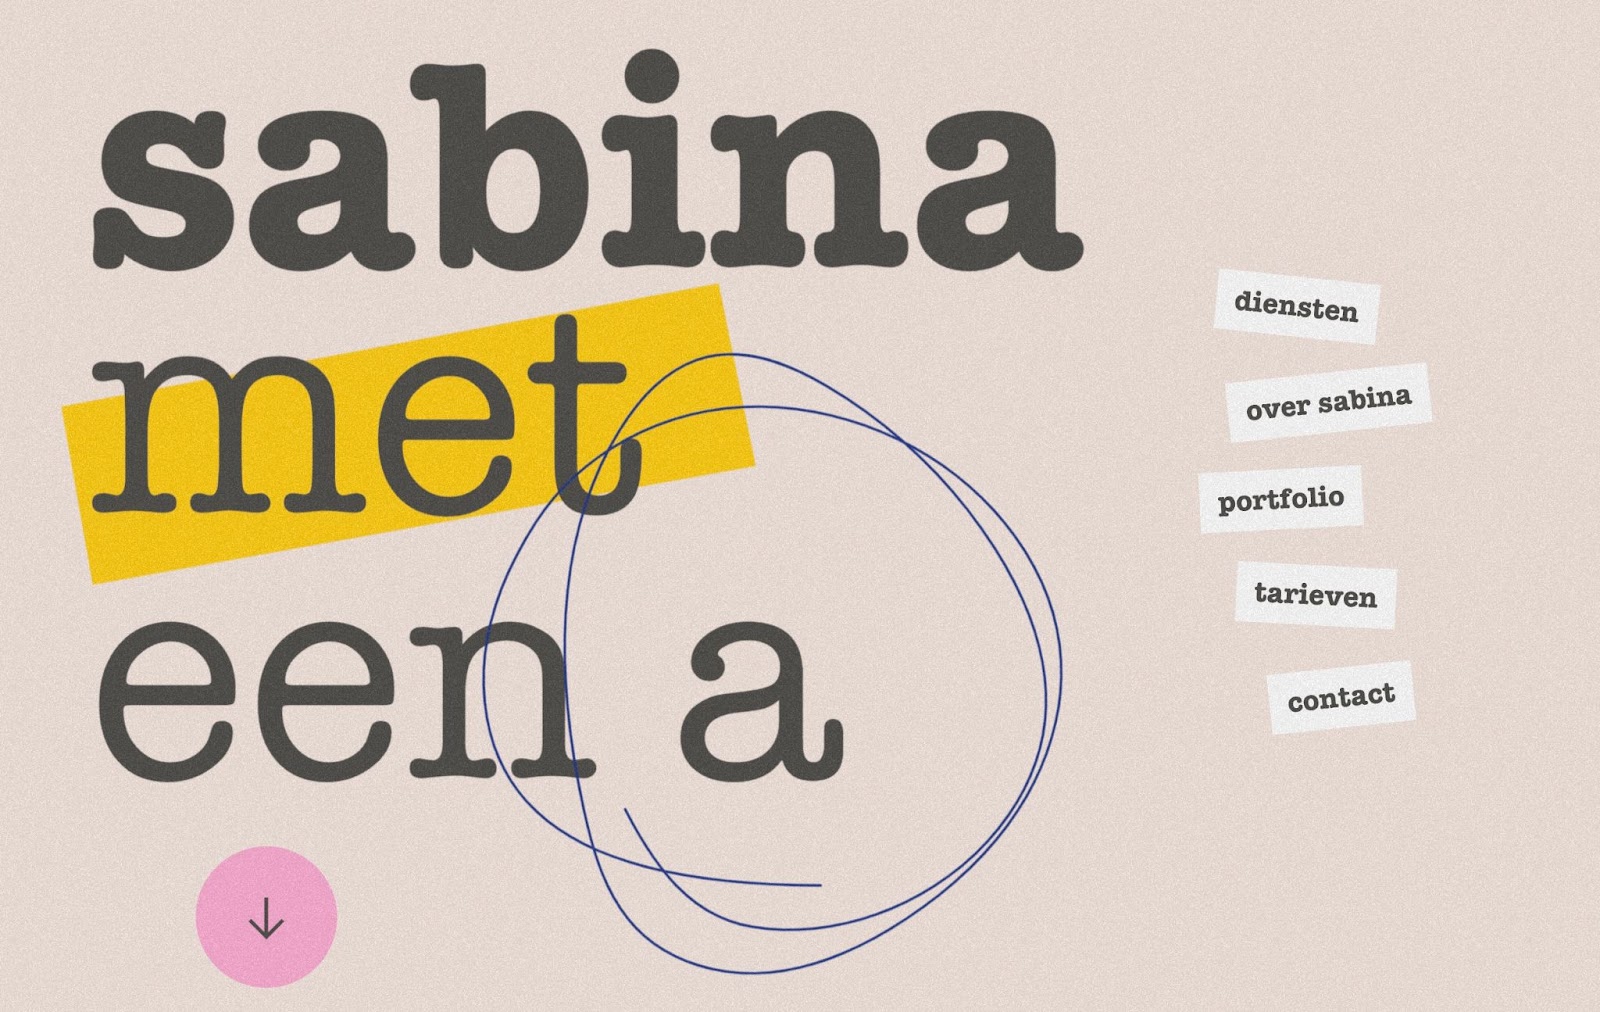 “Sabina met een a”網站標題是棕褐色顆粒狀背景，帶有黑色大標題文本，黃色突出顯示“met”一詞，“a”周圍有一個潦草的圓圈，還有一個帶有向下箭頭的粉紅色圓圈